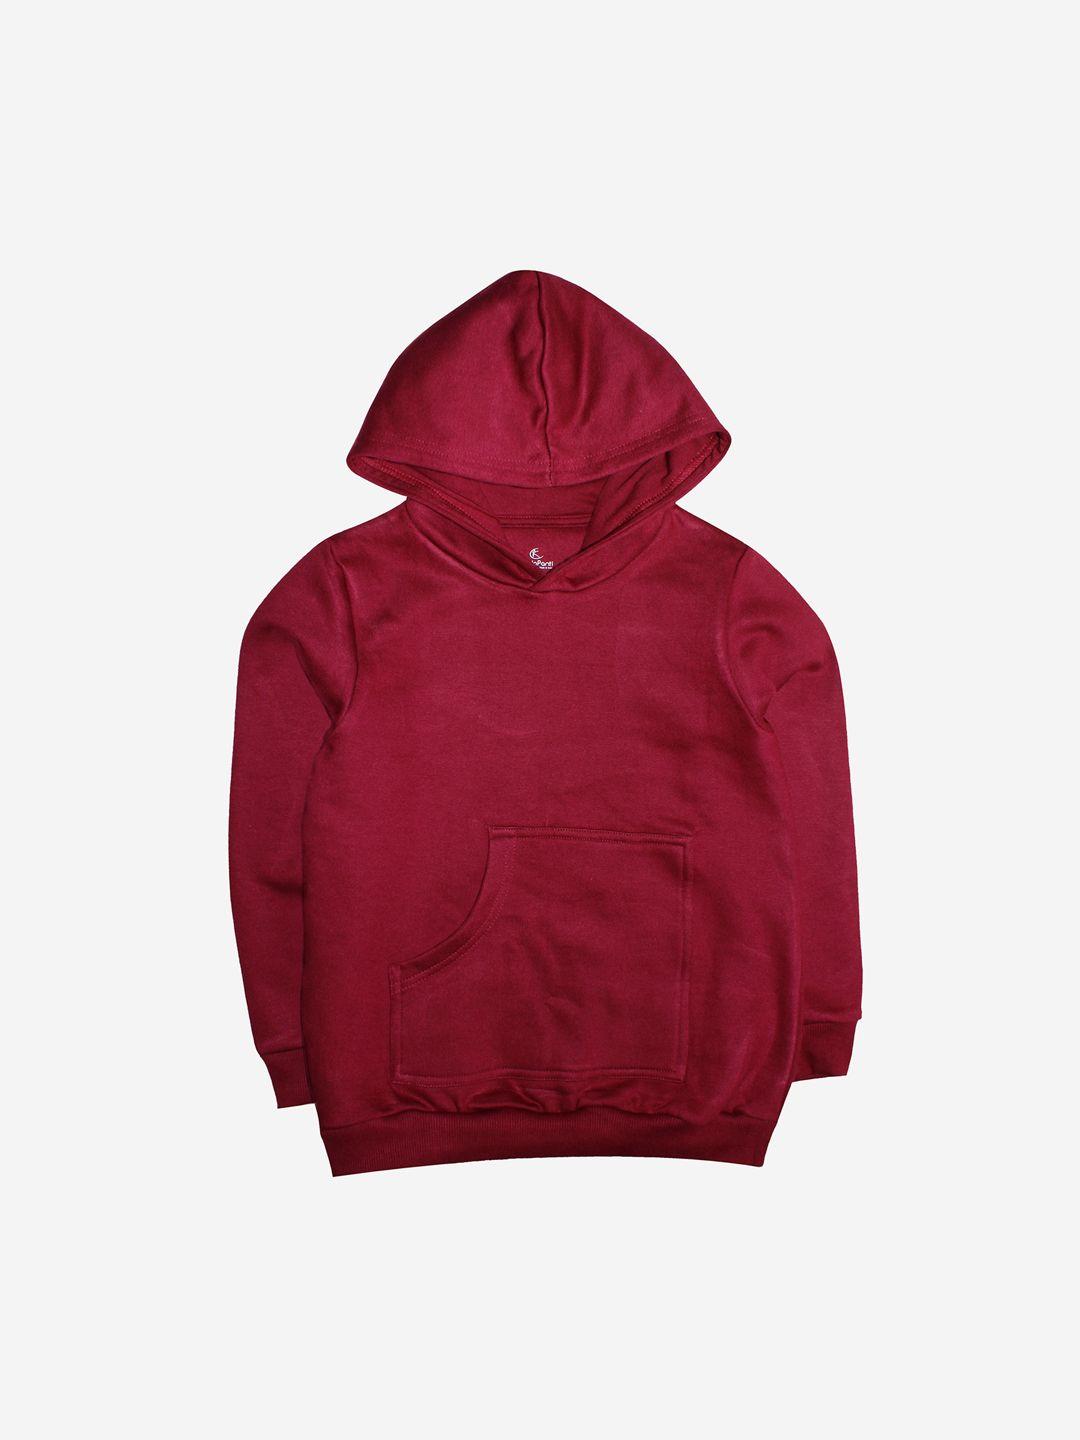 kiddopanti unisex kids maroon pure cotton hooded sweatshirt